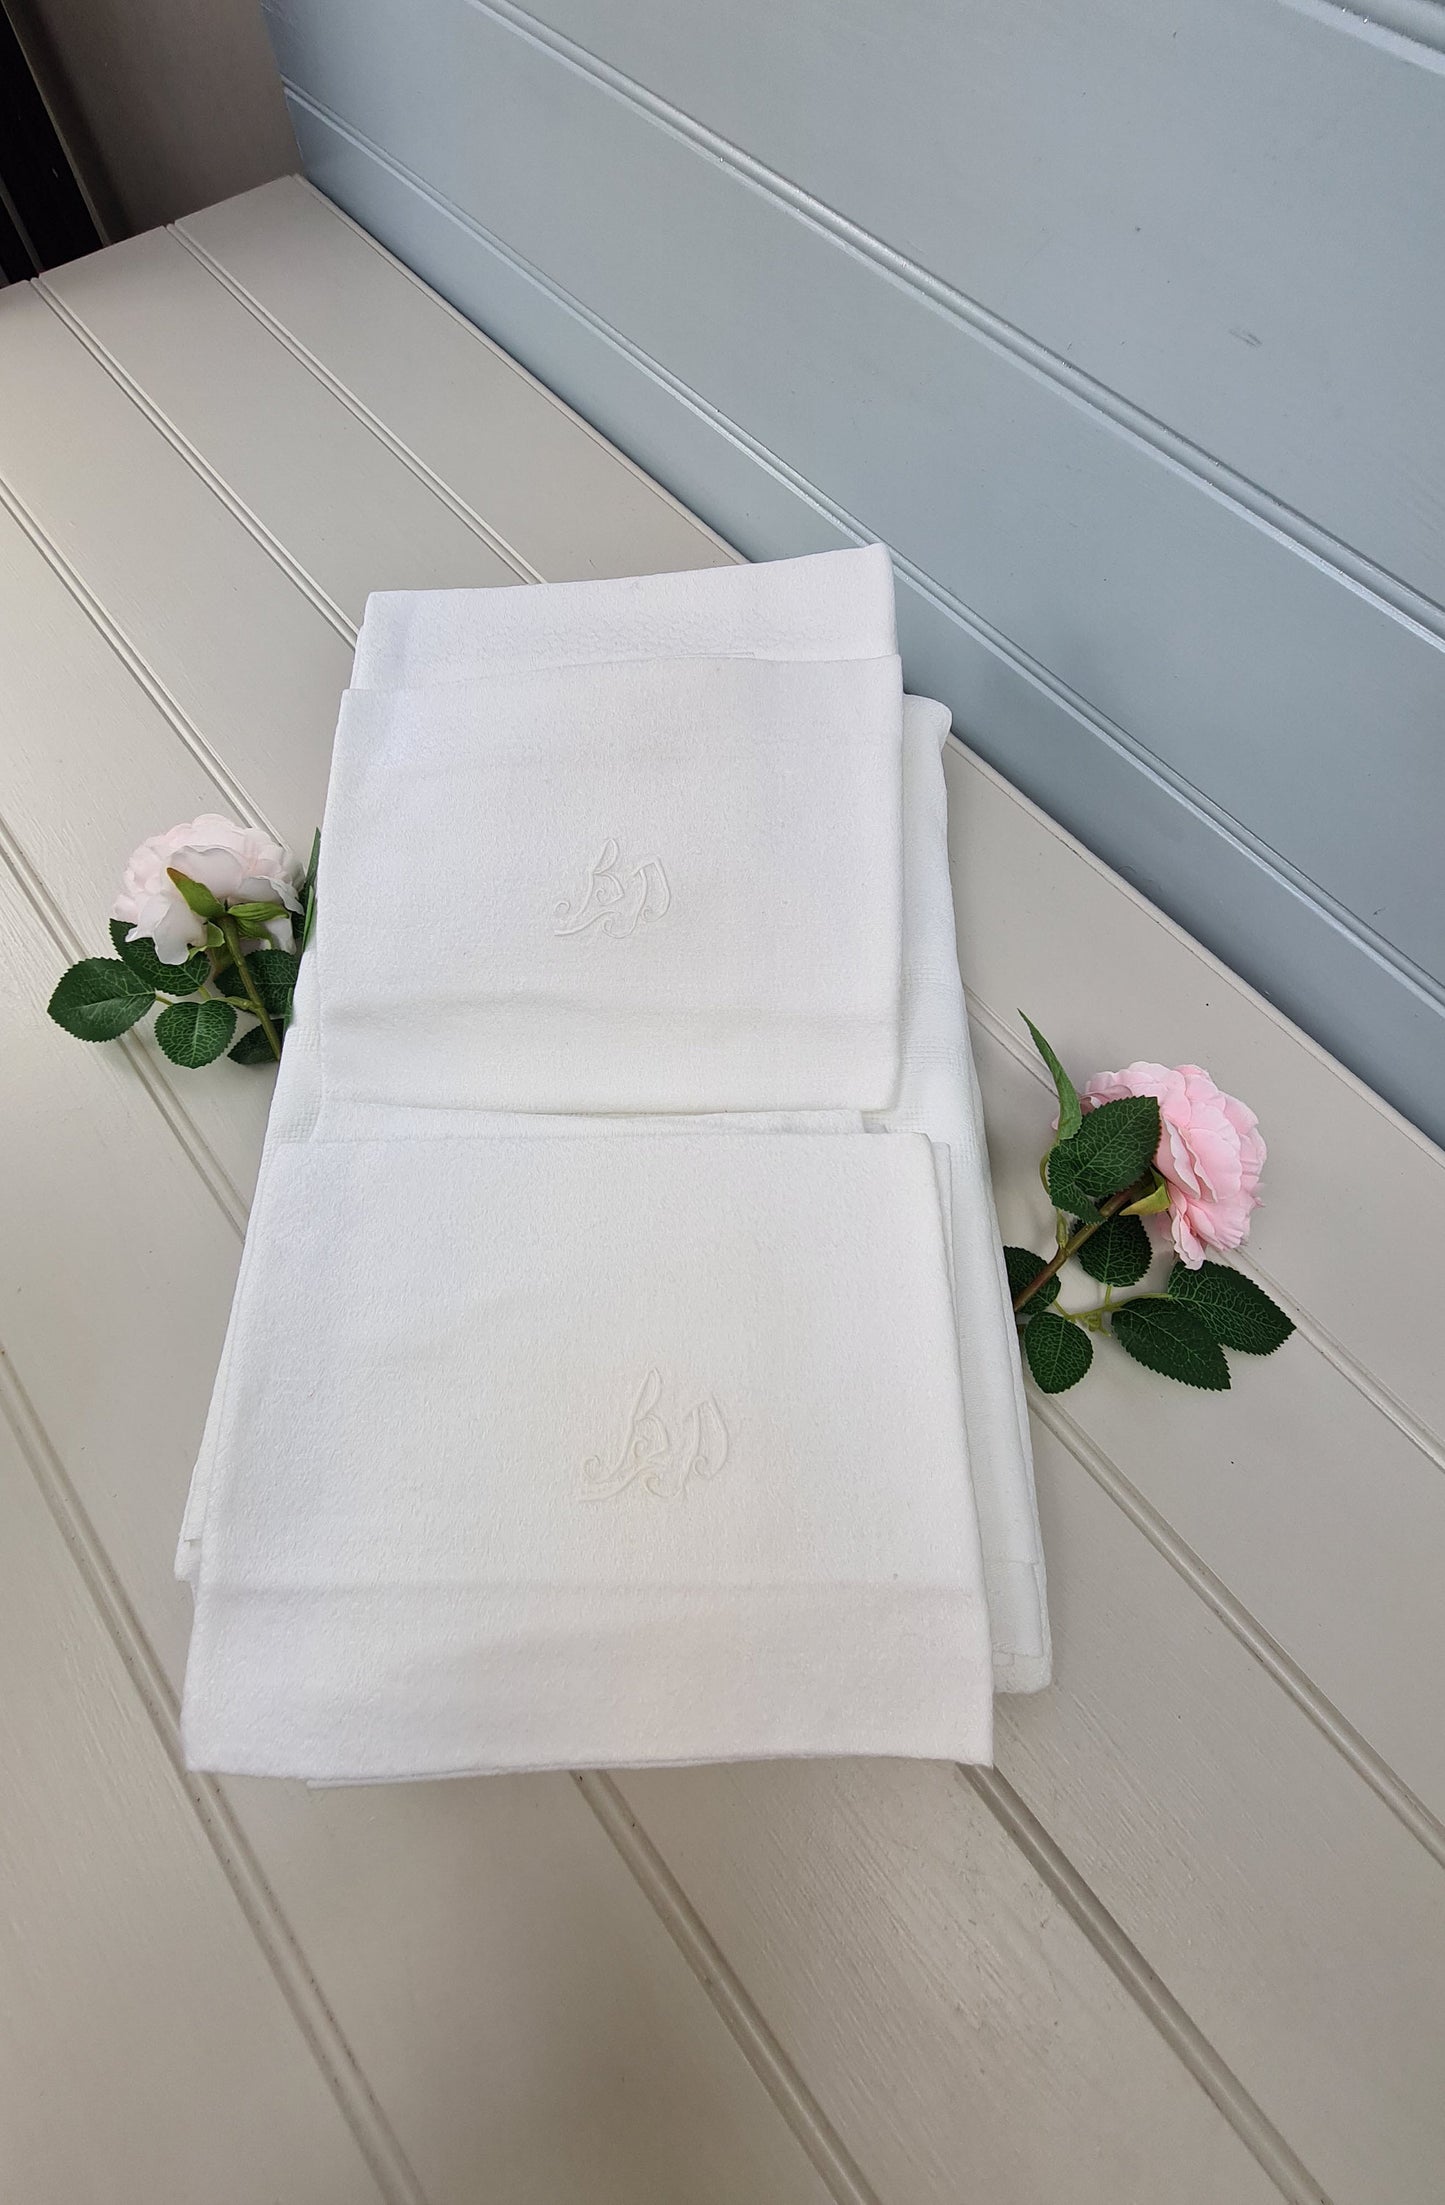 Set 12 BD BJJ French vintage monogram napkins & tablecloth Immaculate